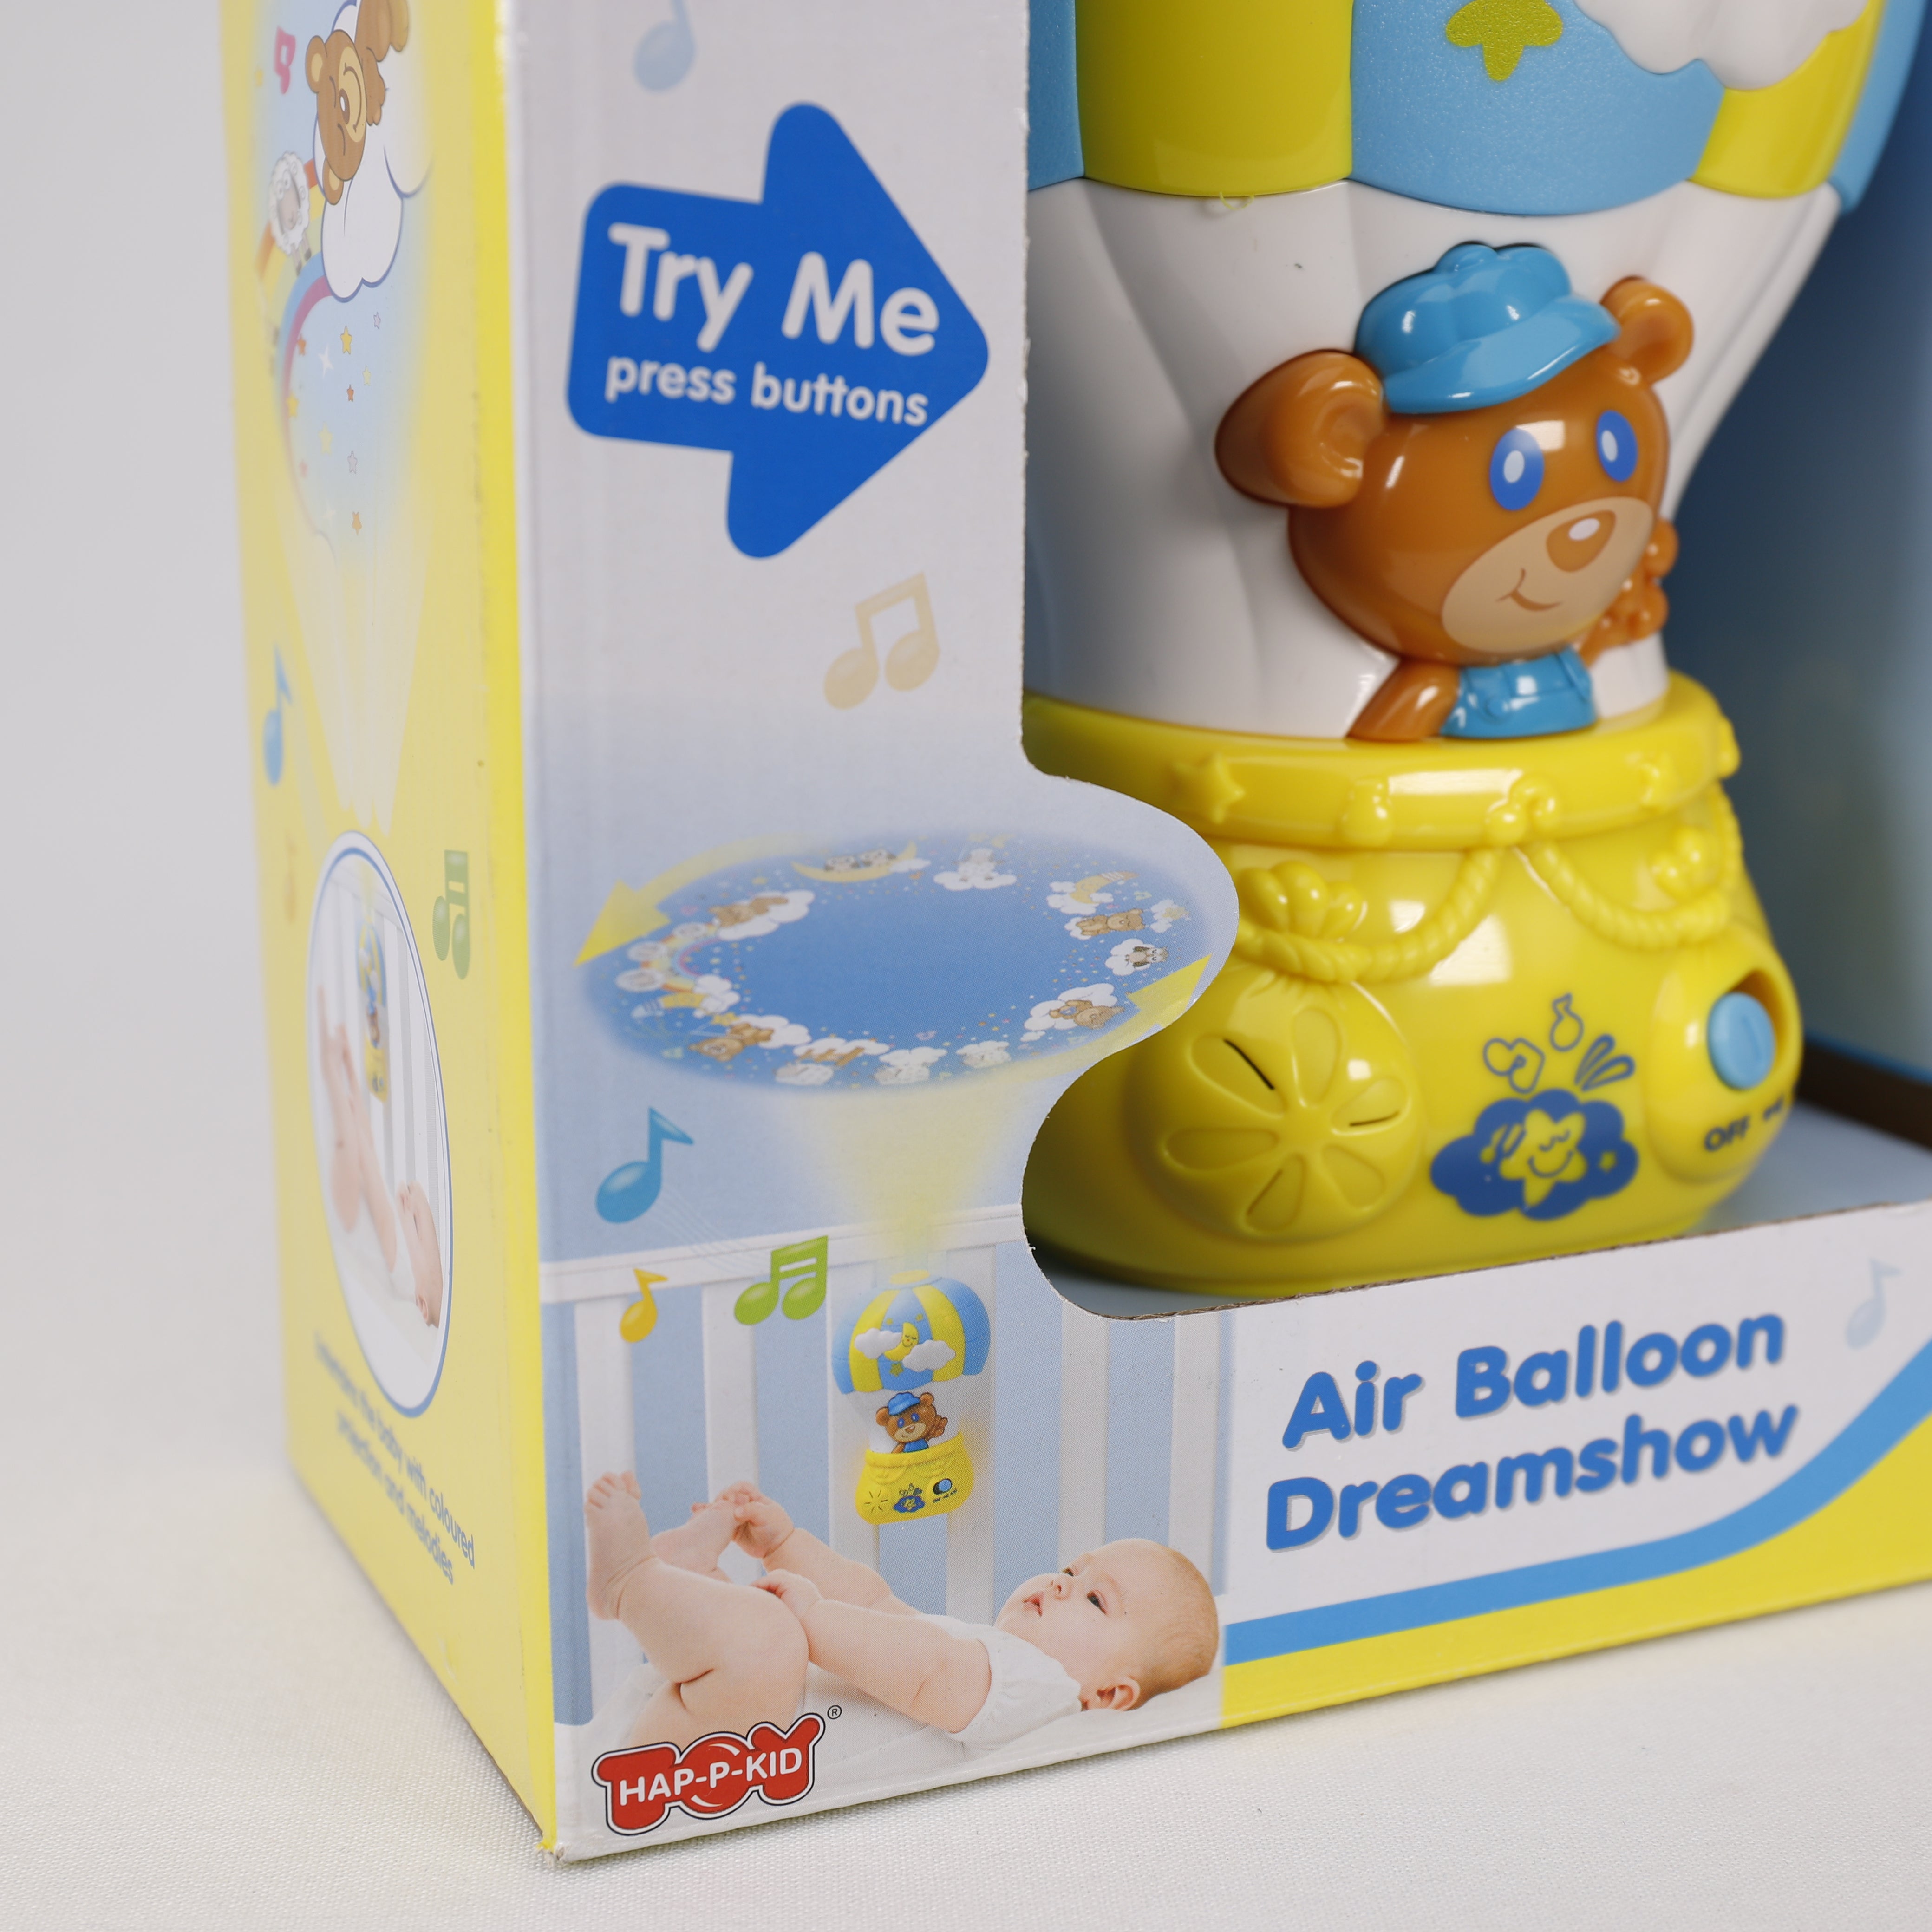 Air Ballon Dreamshow, Beamer, Traumshow, 18 x 26 cm Baby Musik Box, Nachtlicht.